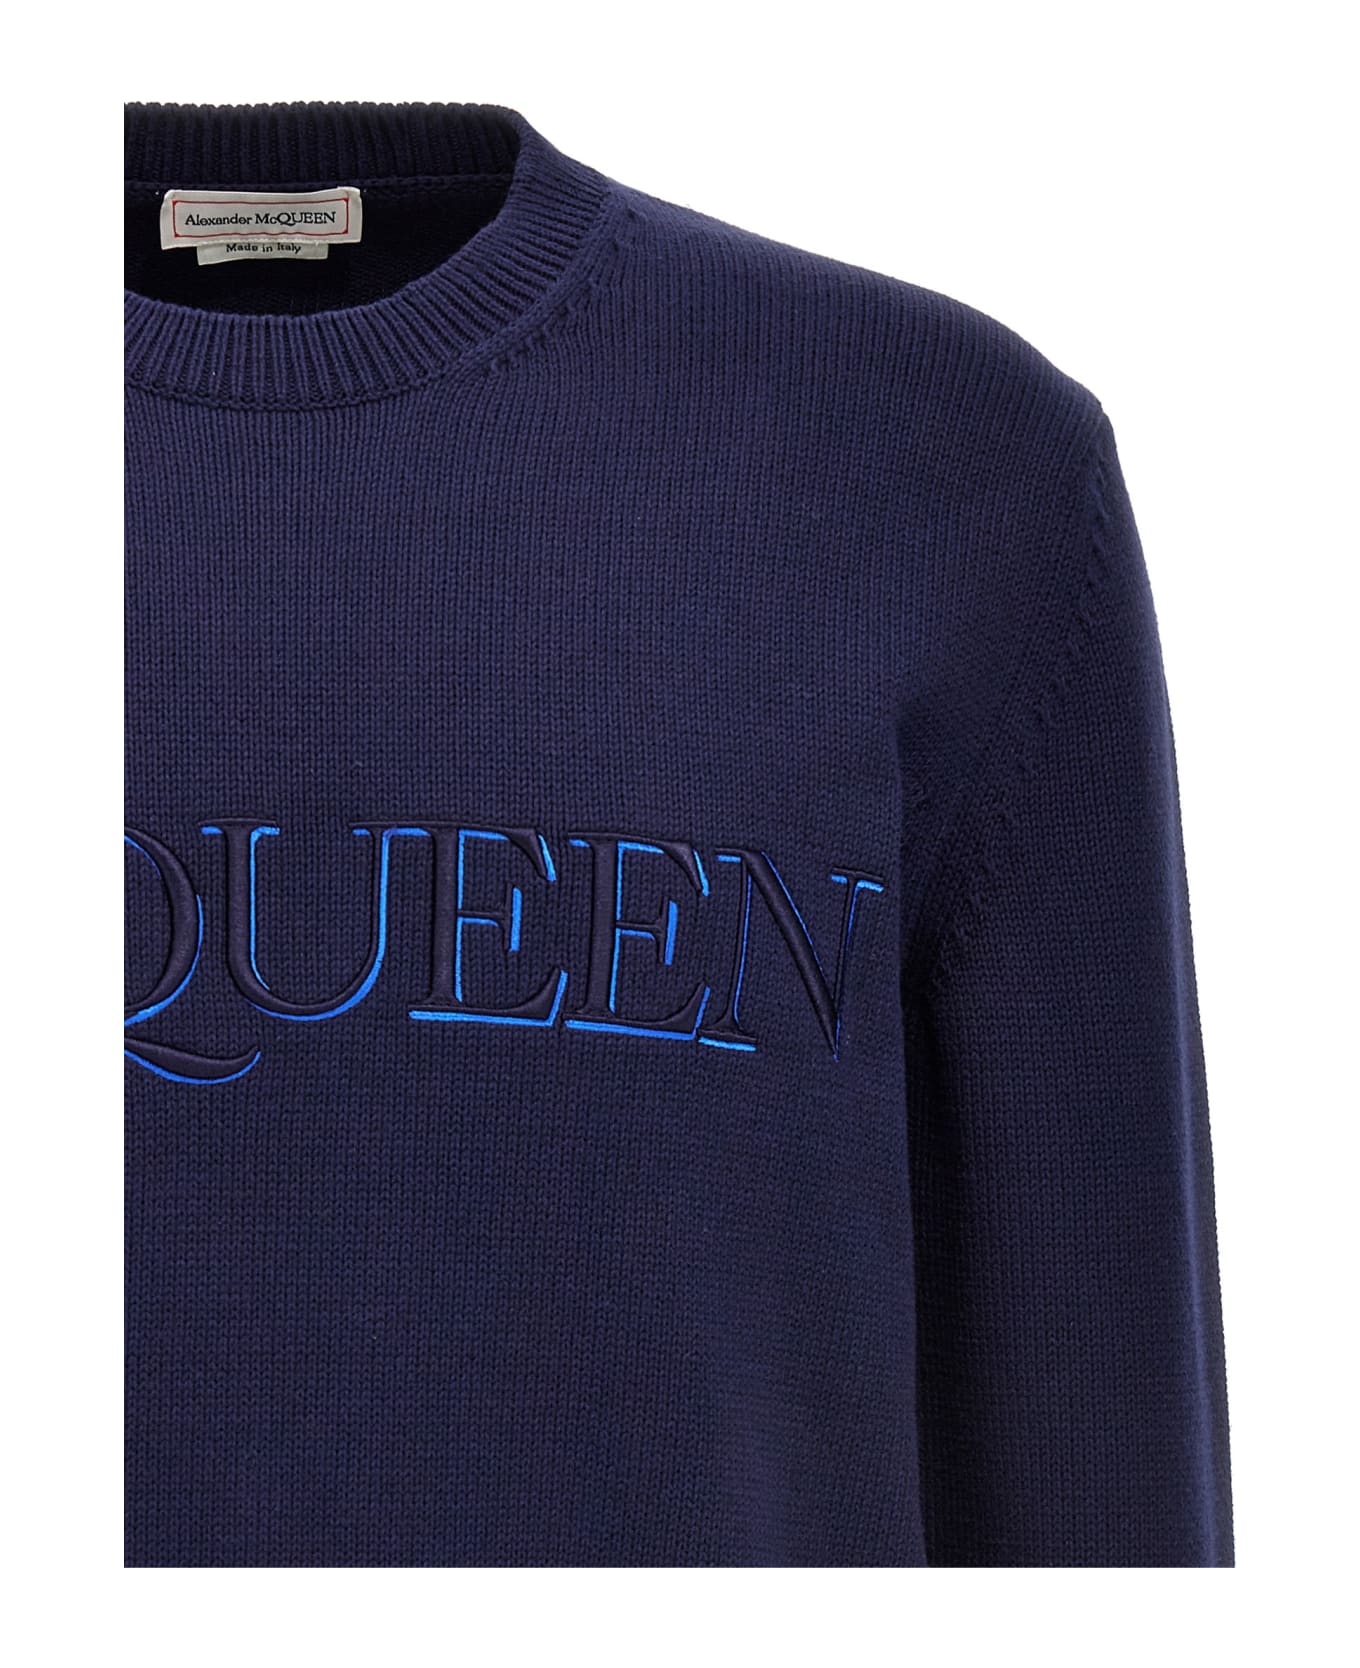 Alexander McQueen Mcqueen Embroidered Sweater - Midnb Galac Blue